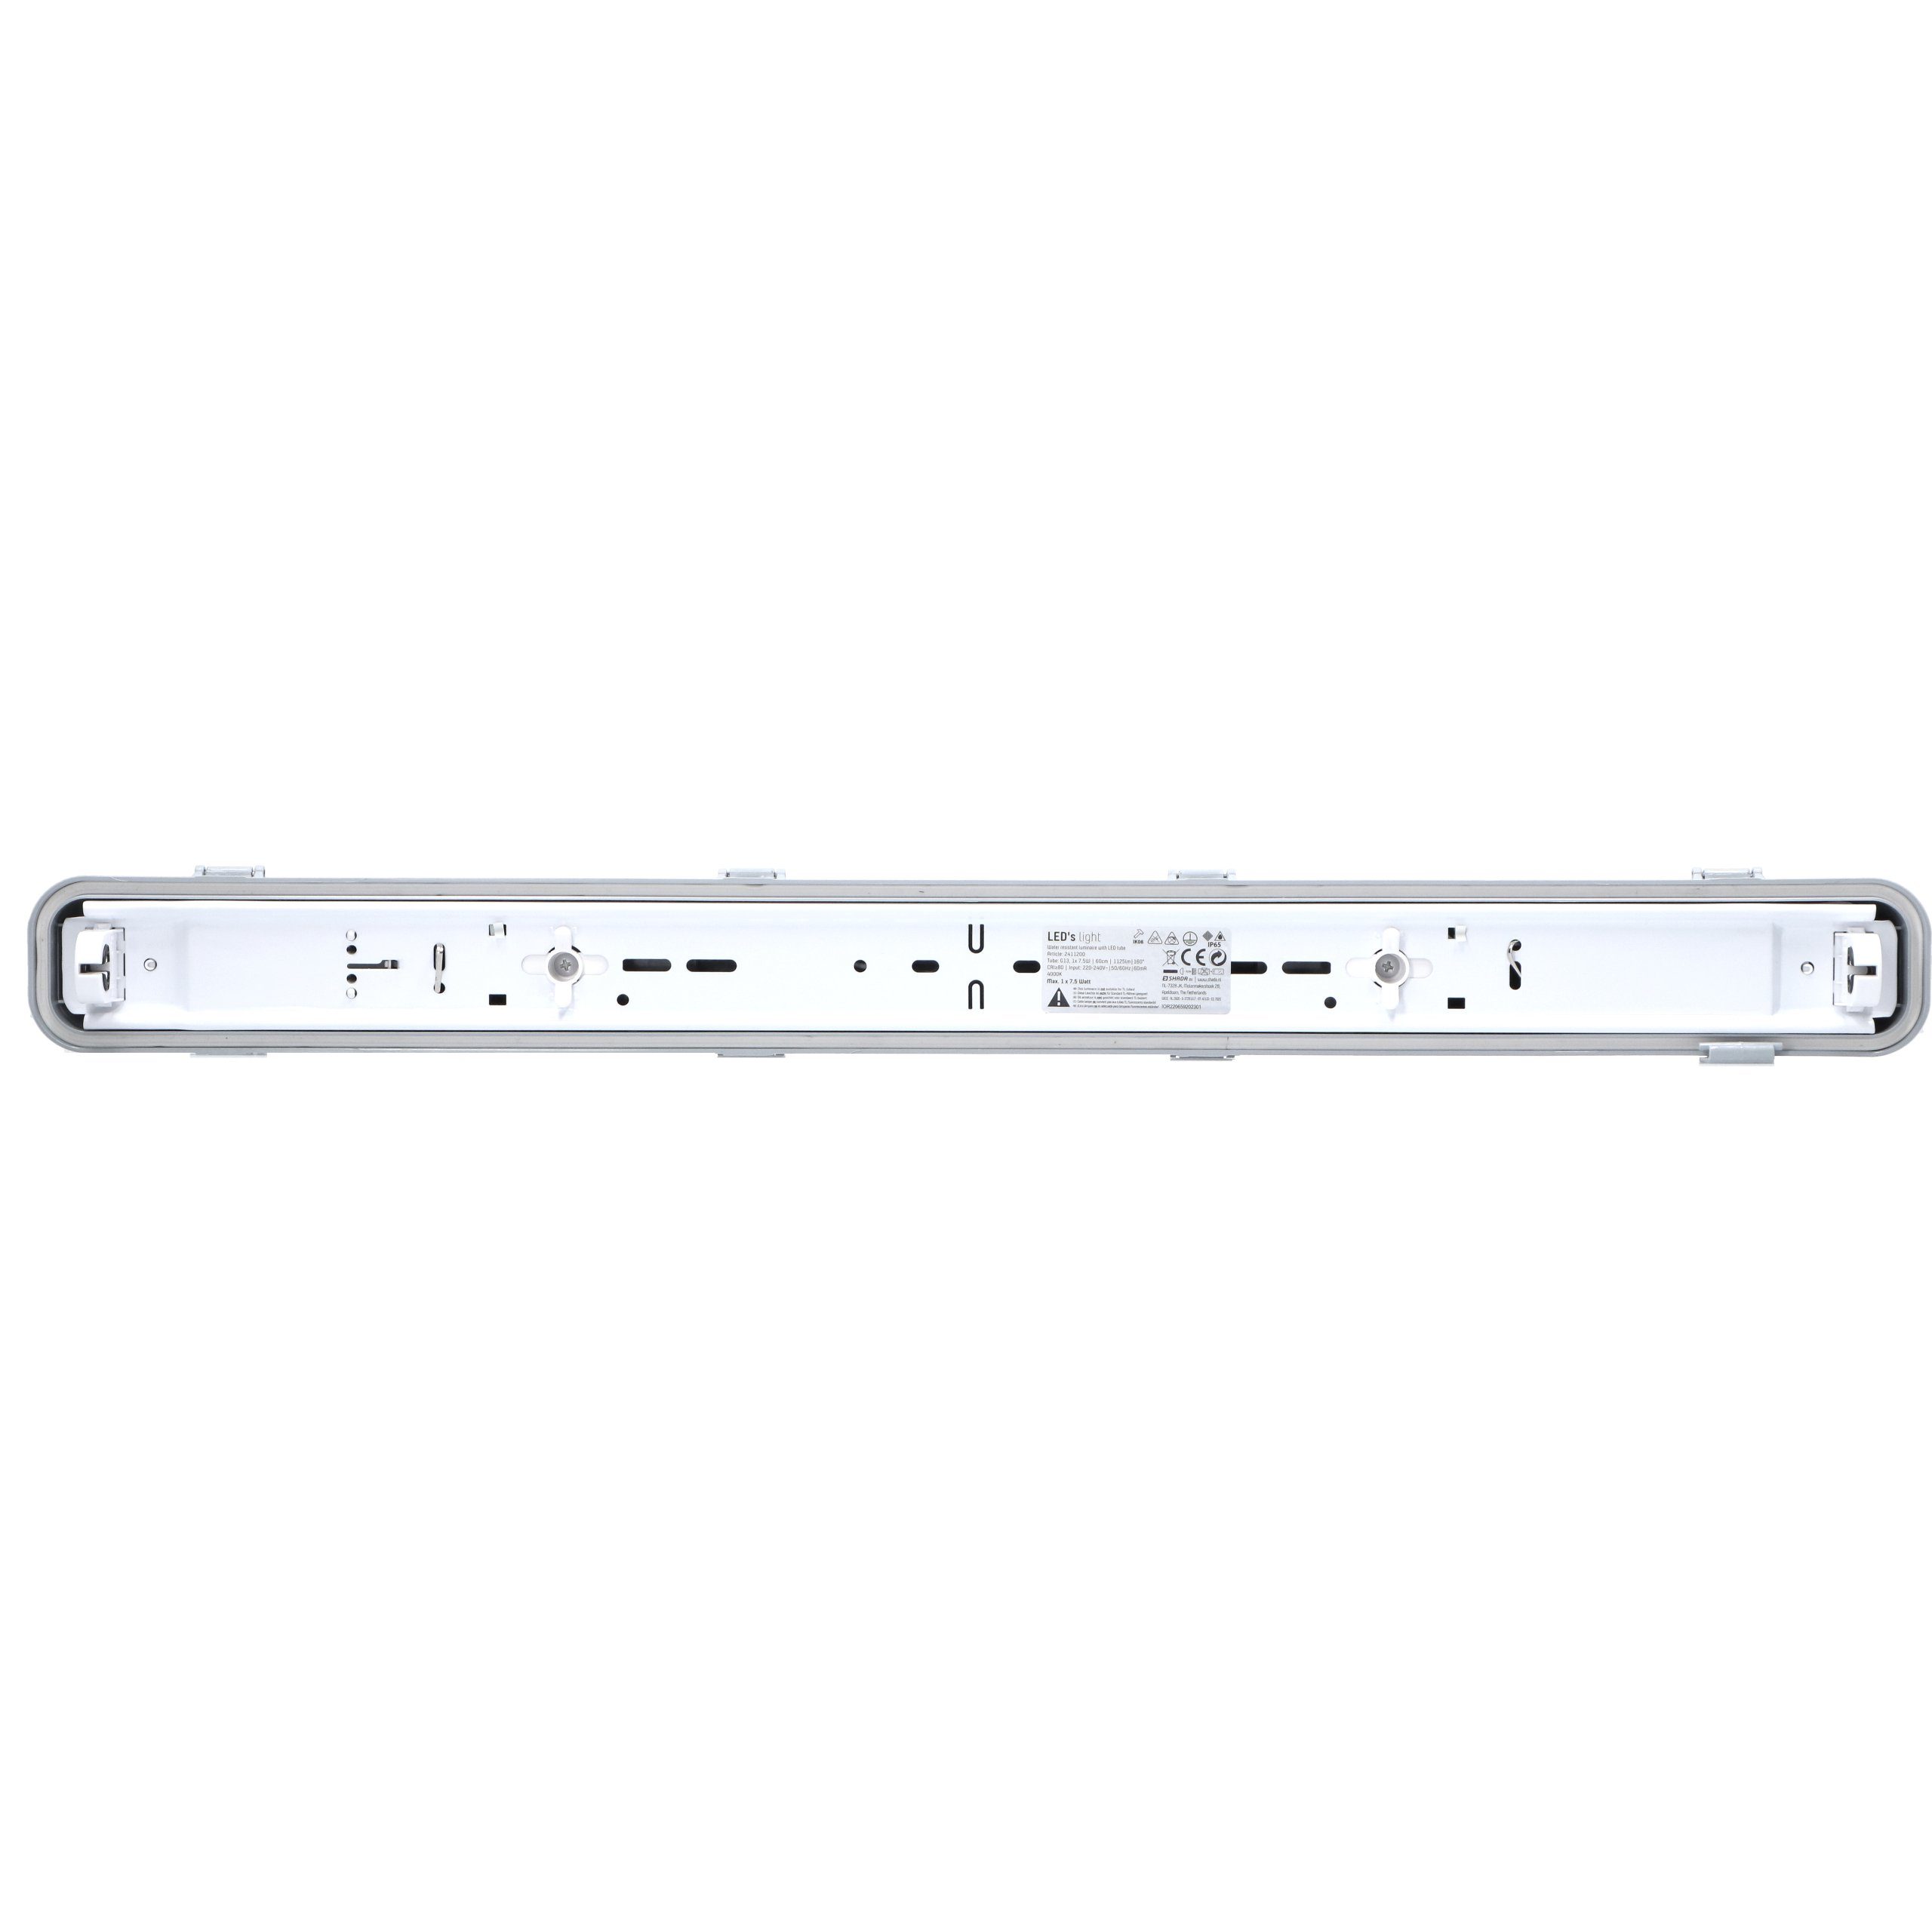 LED LED-Röhre LED's Deckenleuchte G13 IP65 cm 2411200 60 Feuchtraumleuchte, neutralweiß light LED, mit 7,5W